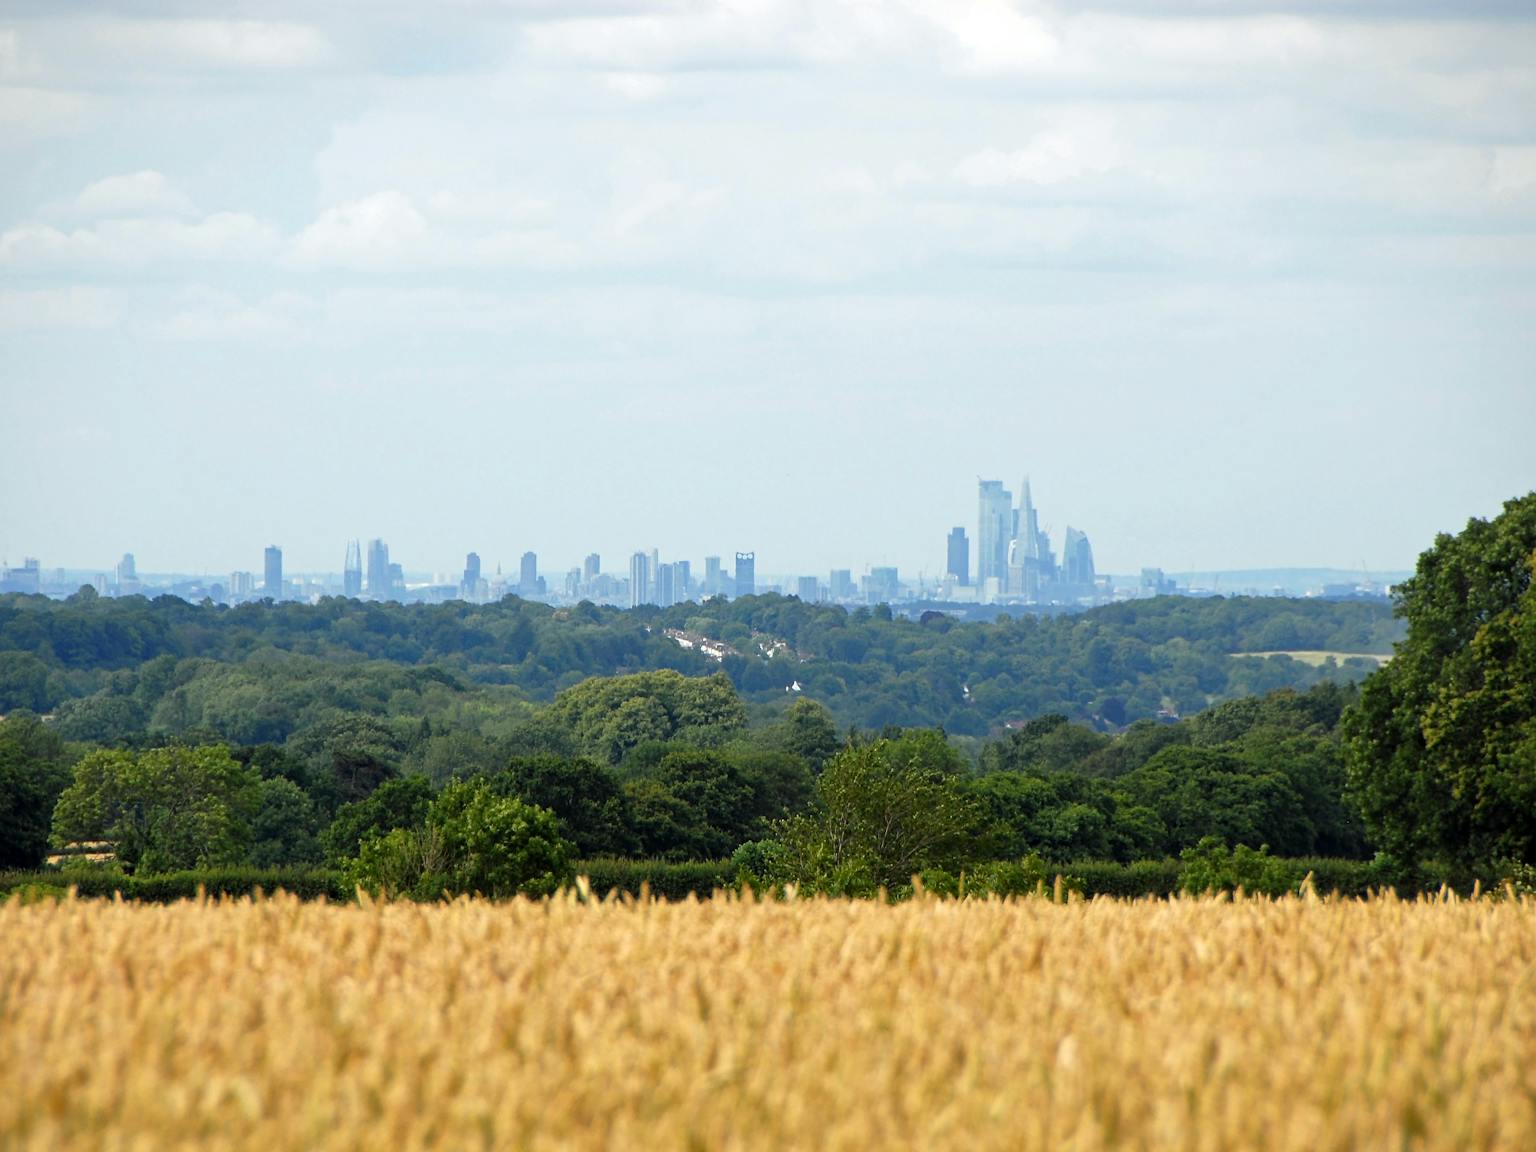 City skyline and corn field